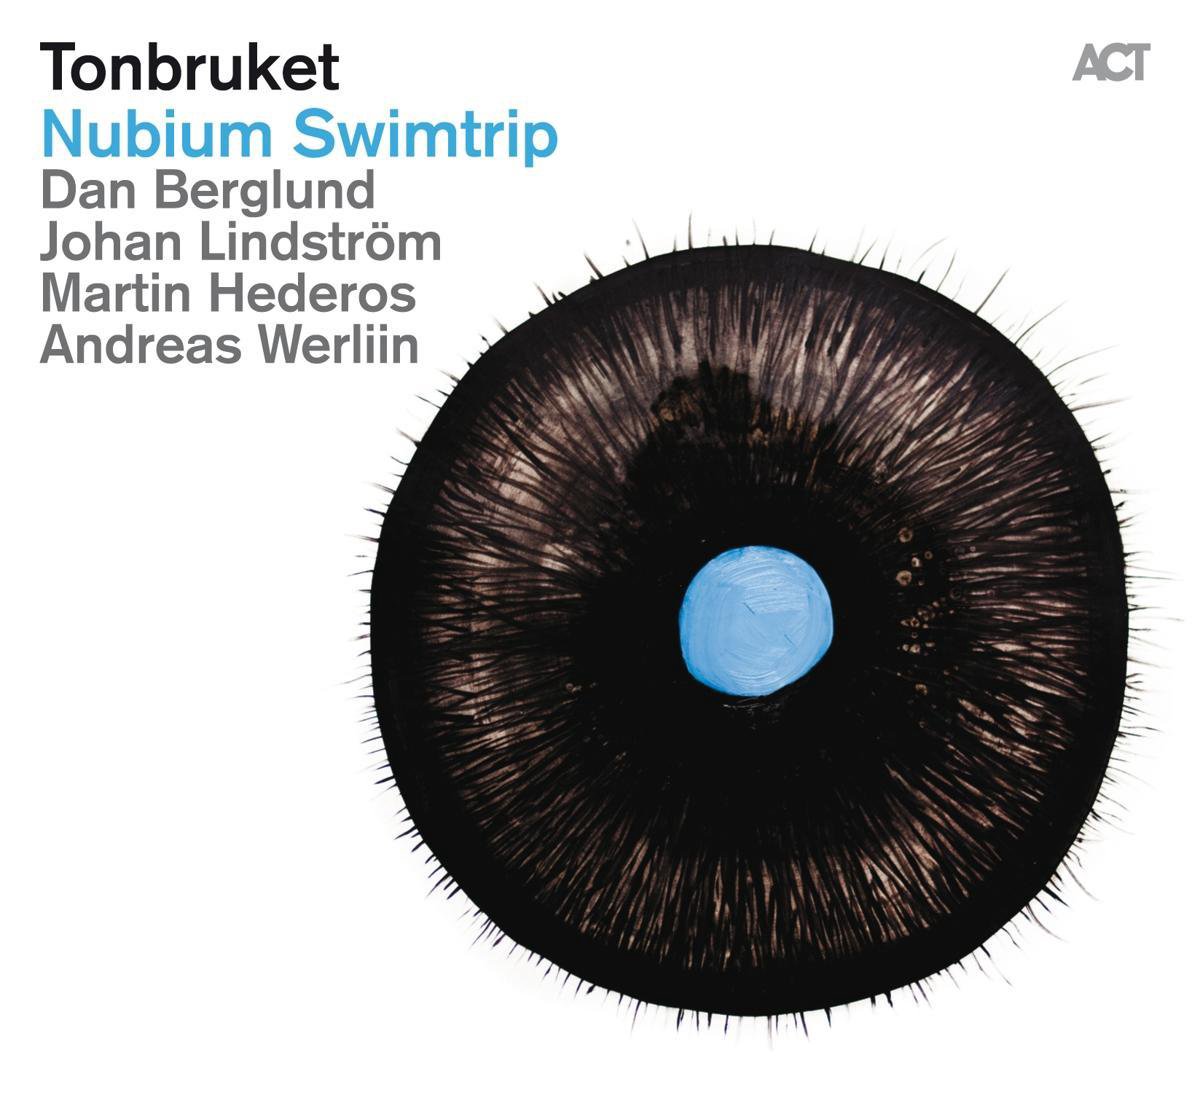 Nubium Swimtrip | Dan Berglund Ton Bruket